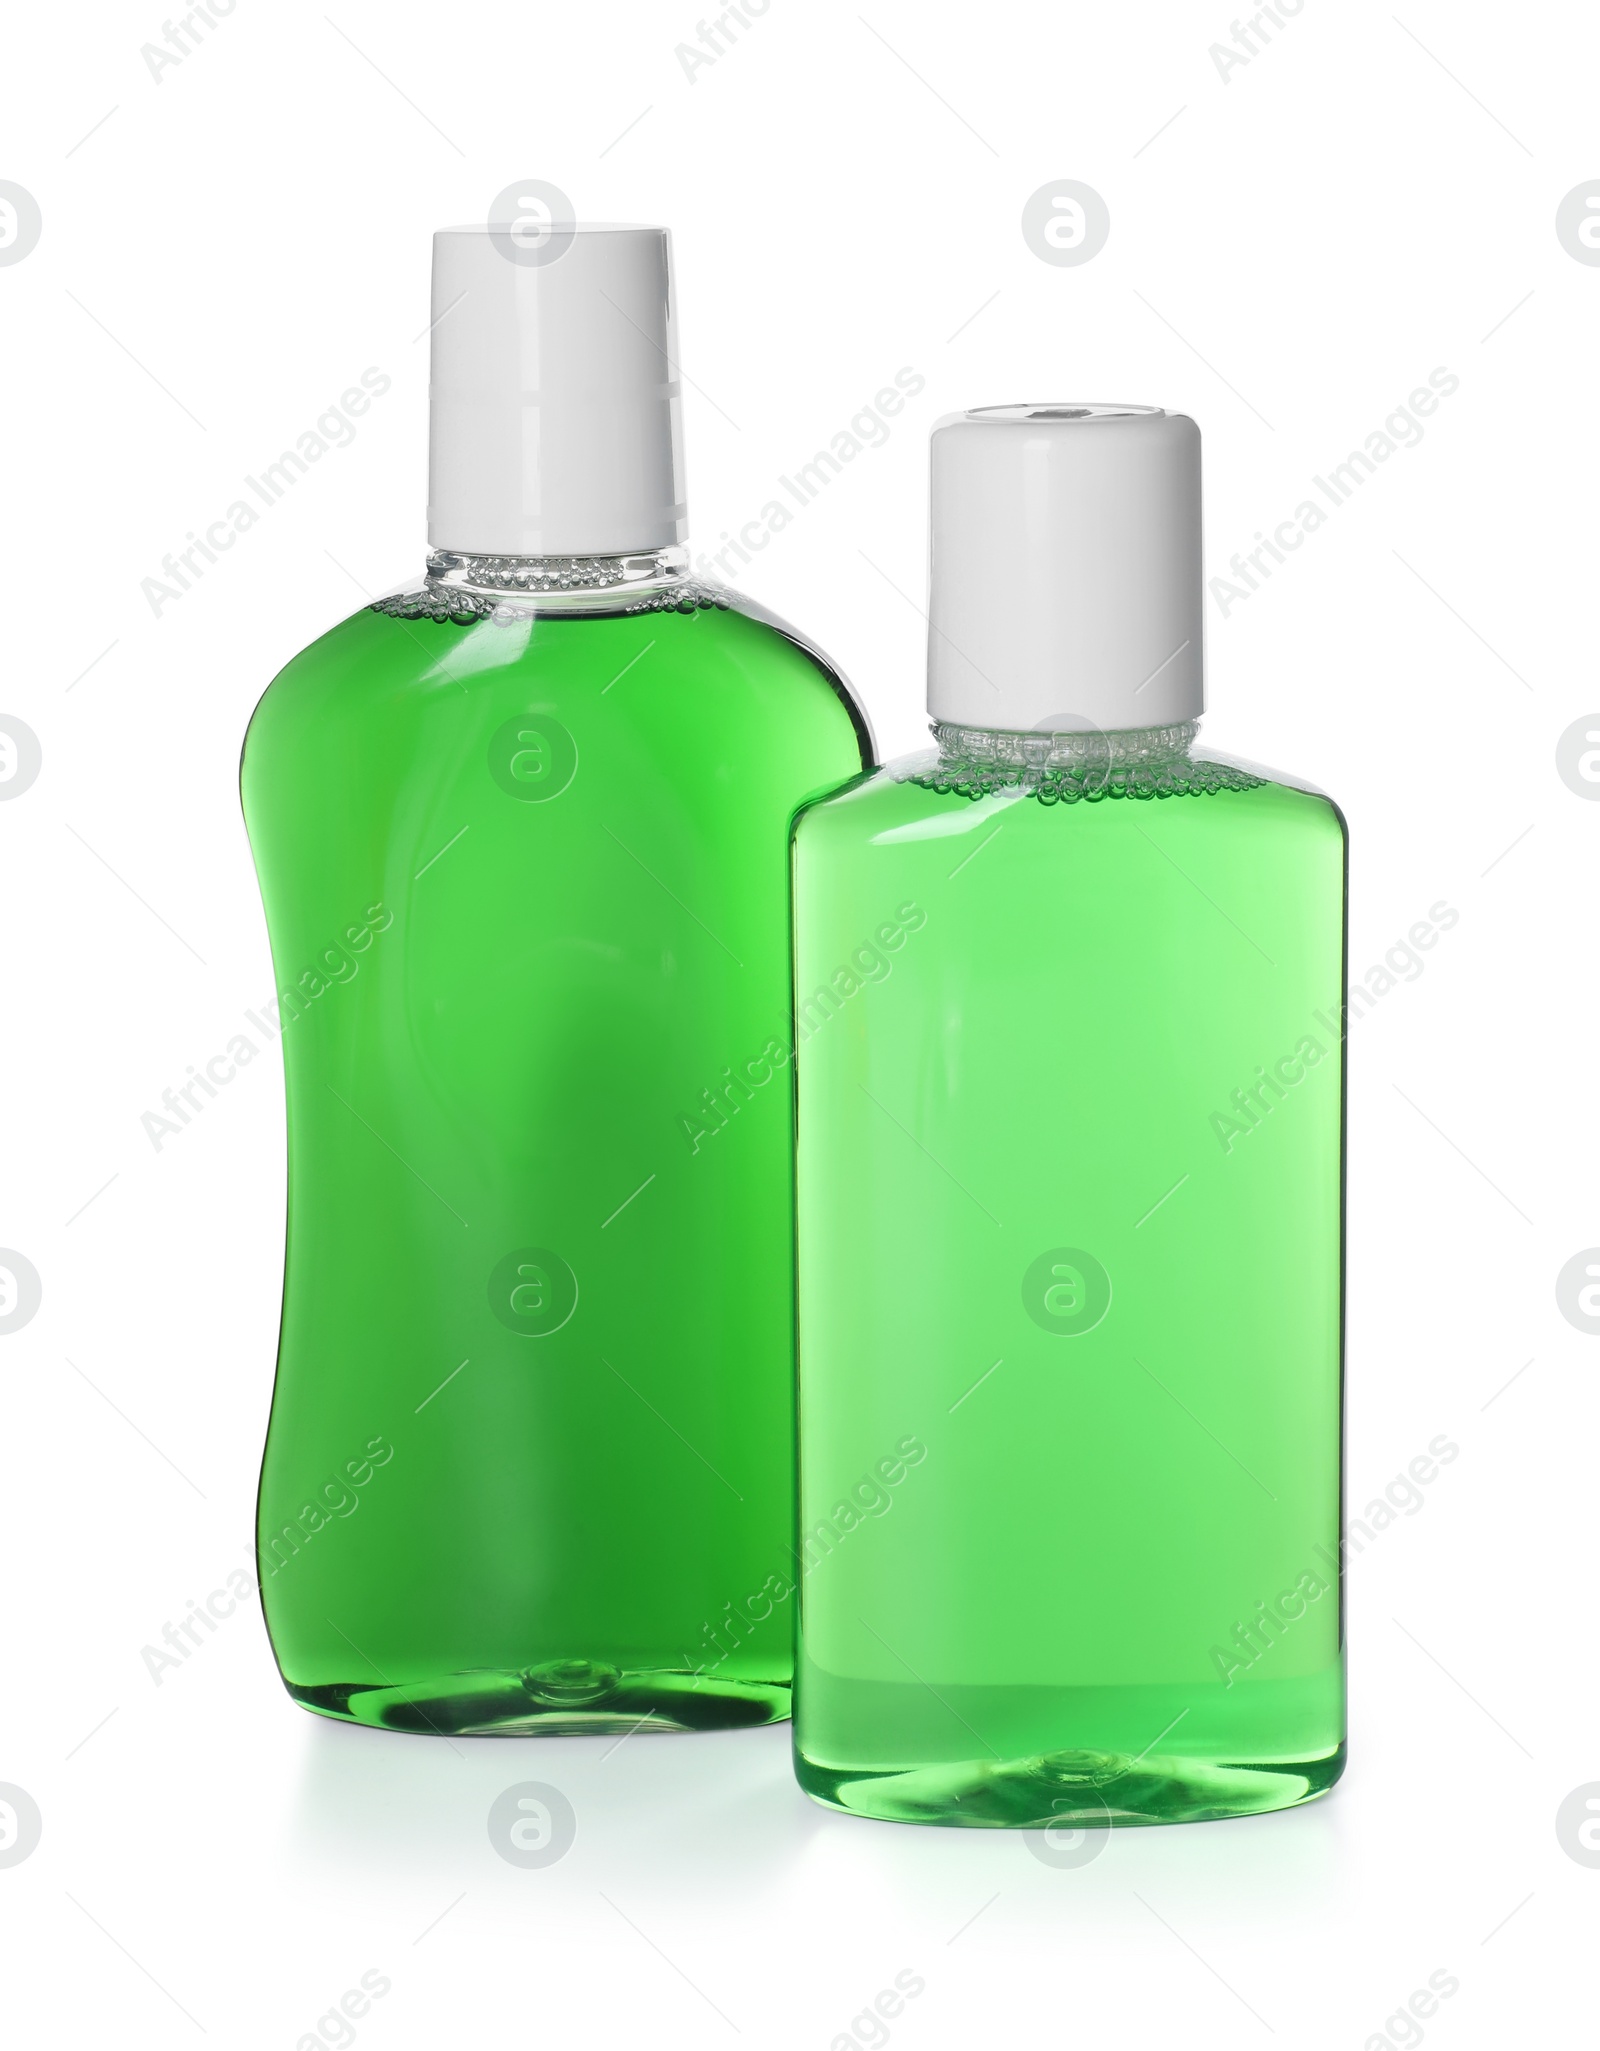 Photo of Two bottles of mouthwash isolated on white